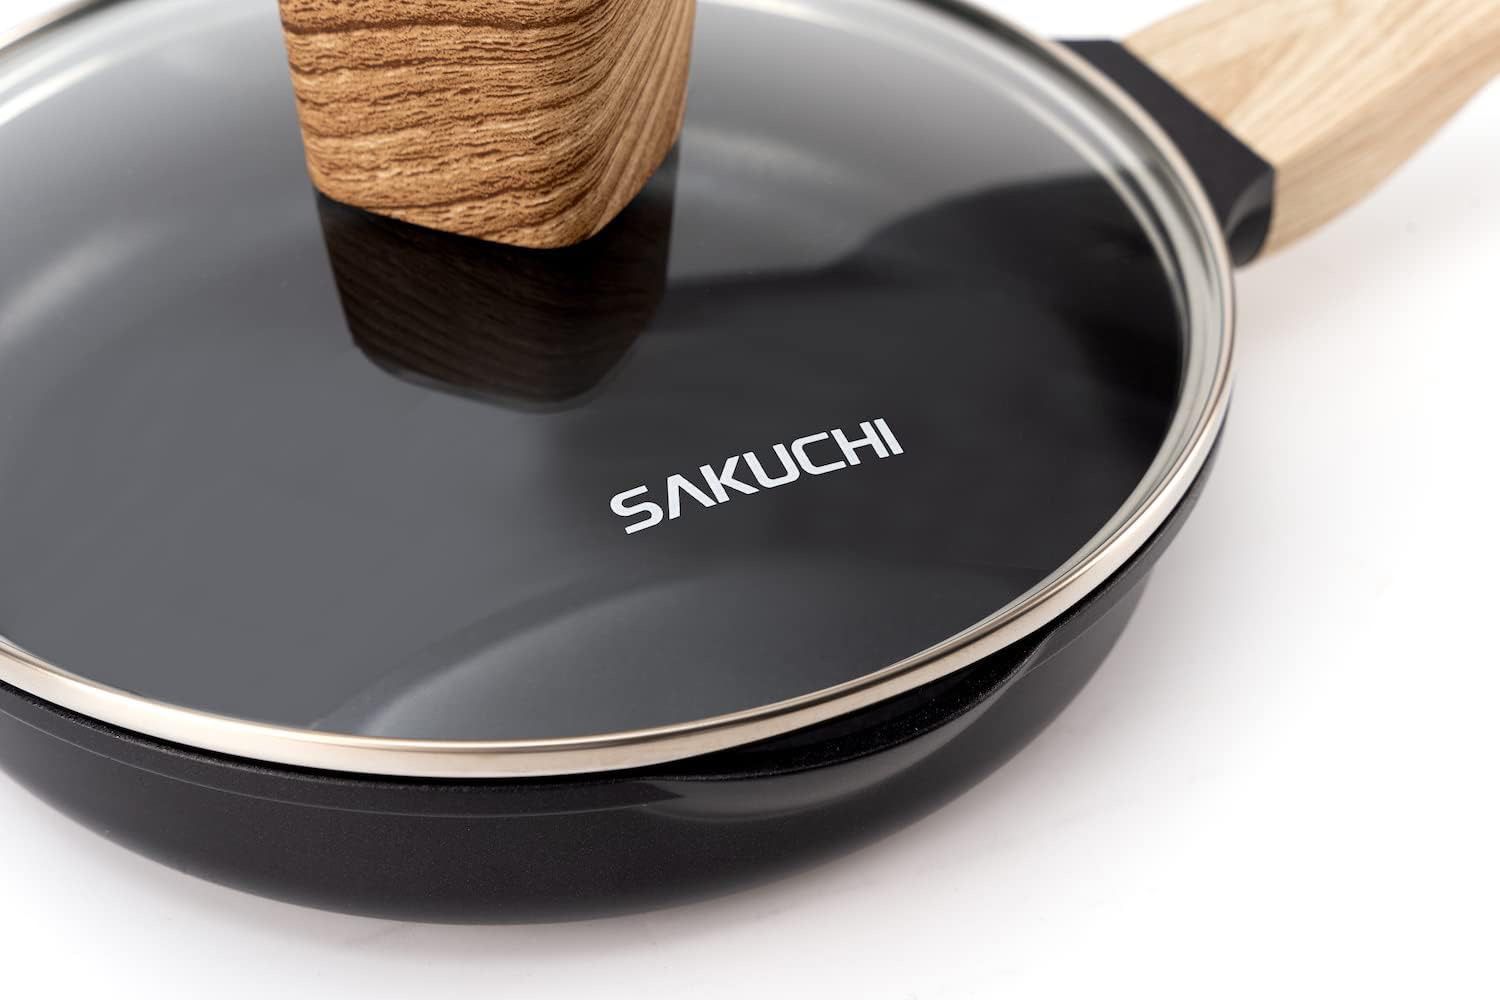 Sakuchi Deep Frying Pan with Lid Nonstick Saute Pan (Black, 9.5 Inch)